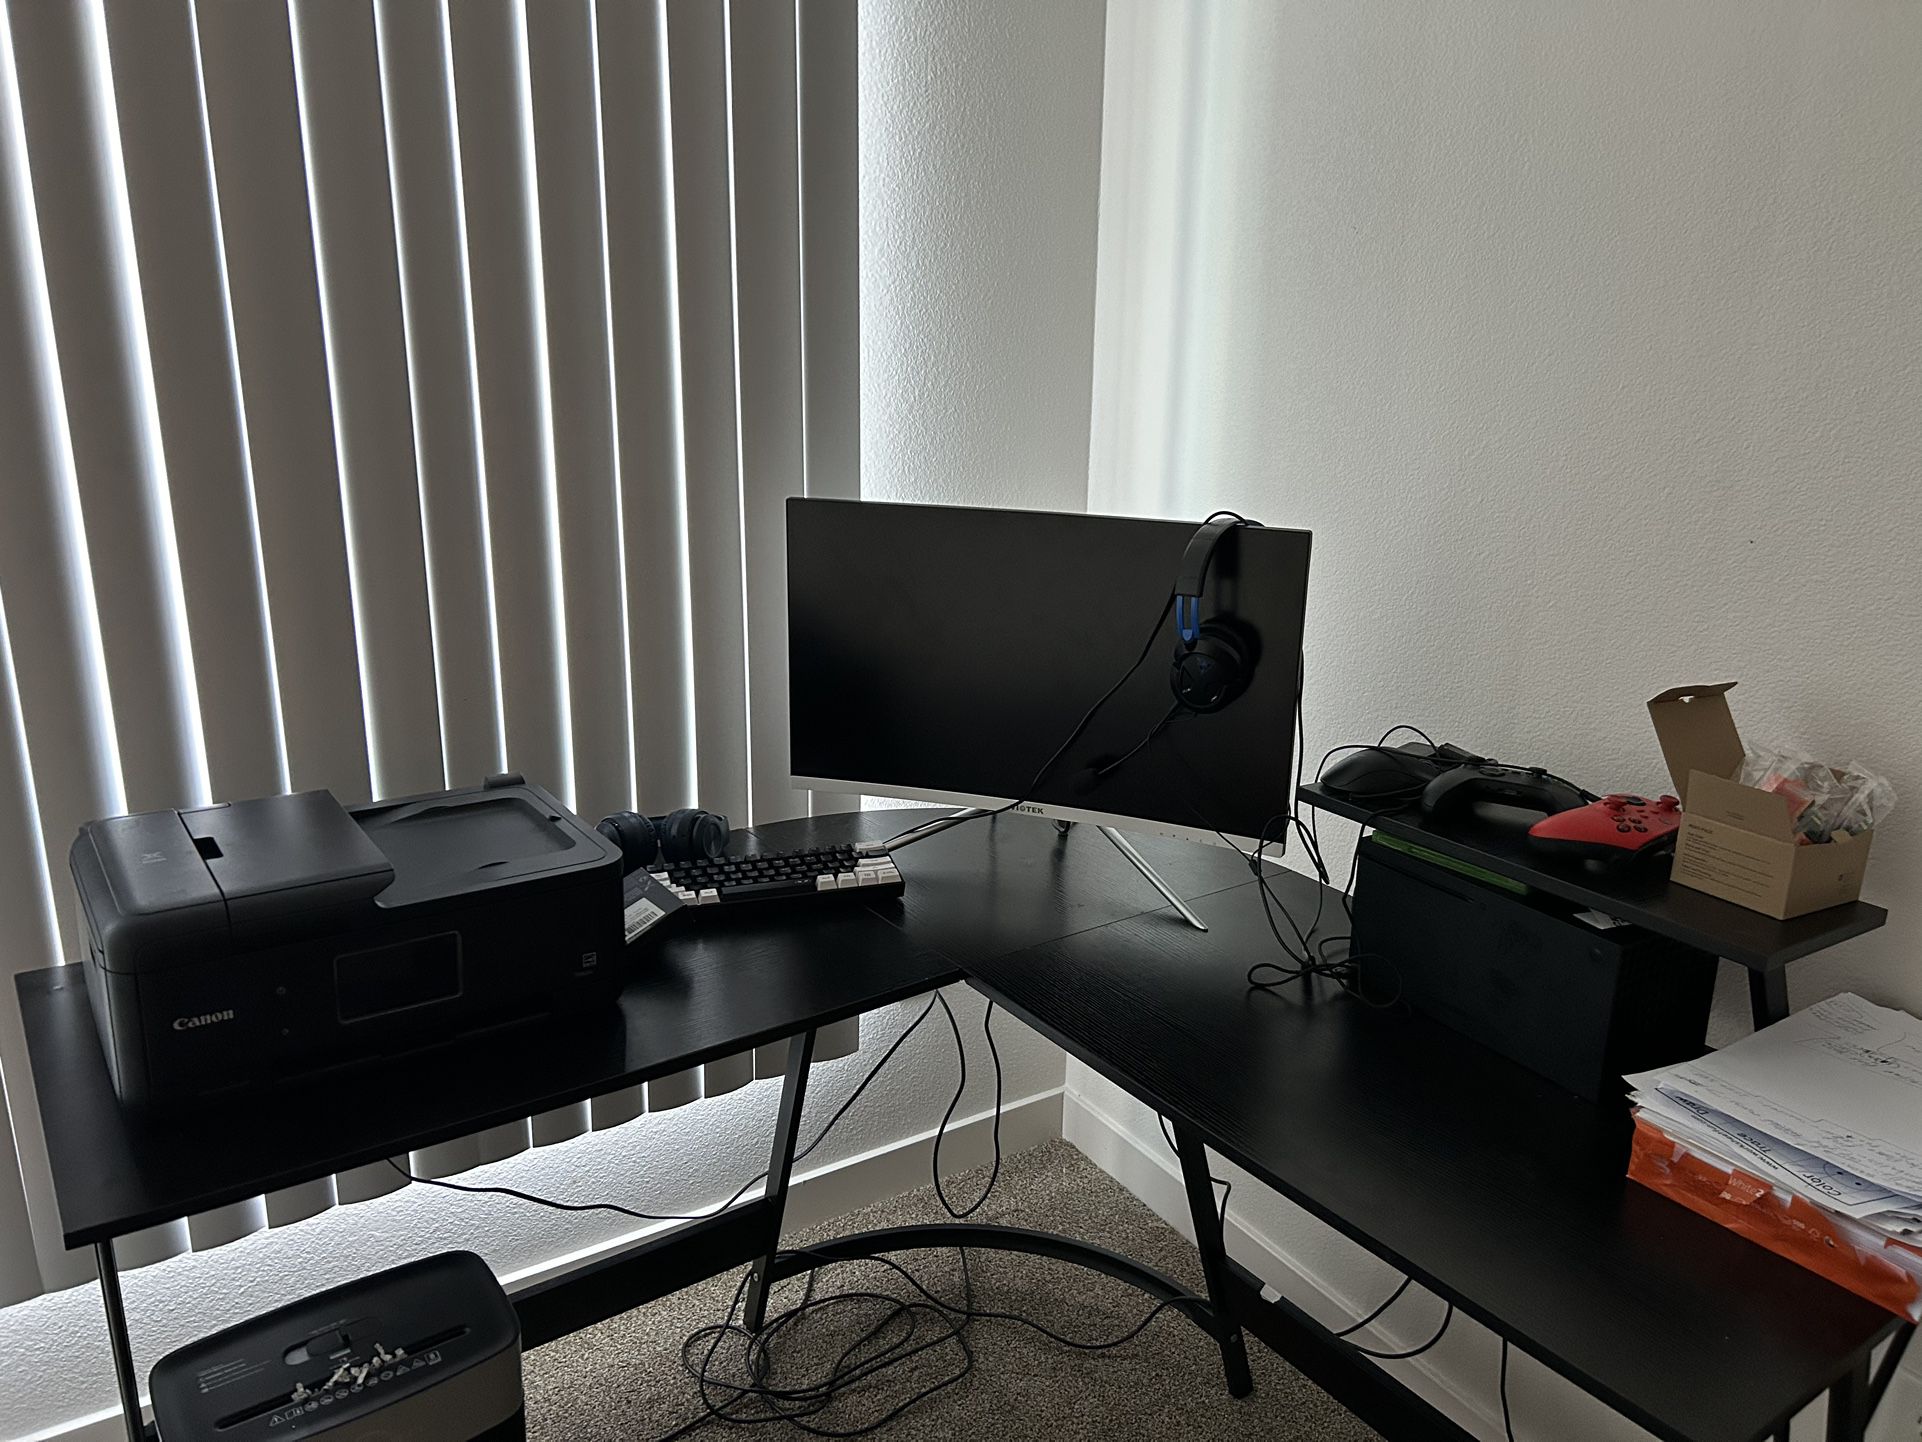 Gaming Monitor And Table 